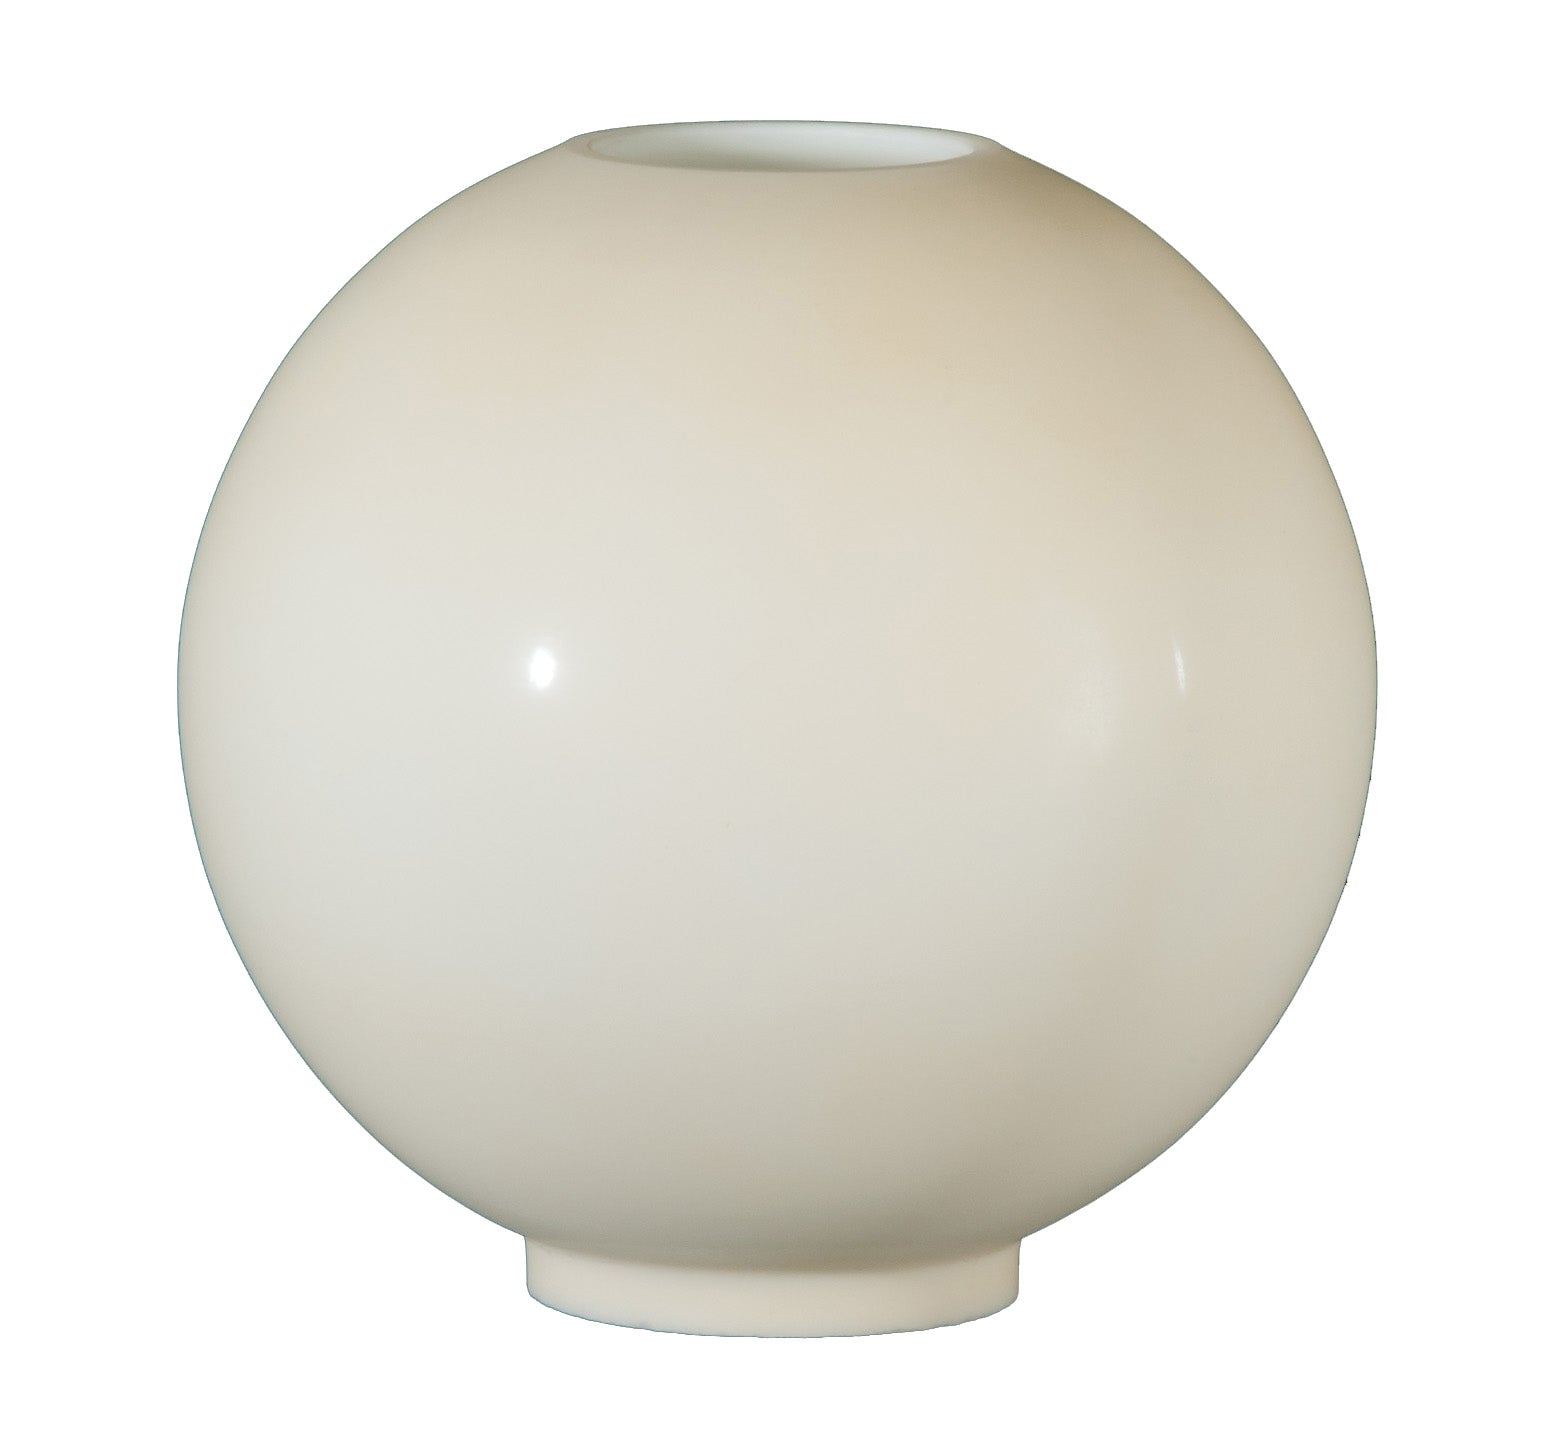 10 inch diameter Opal Glass Ball Shade, Cream Tint, 4 inch fitter